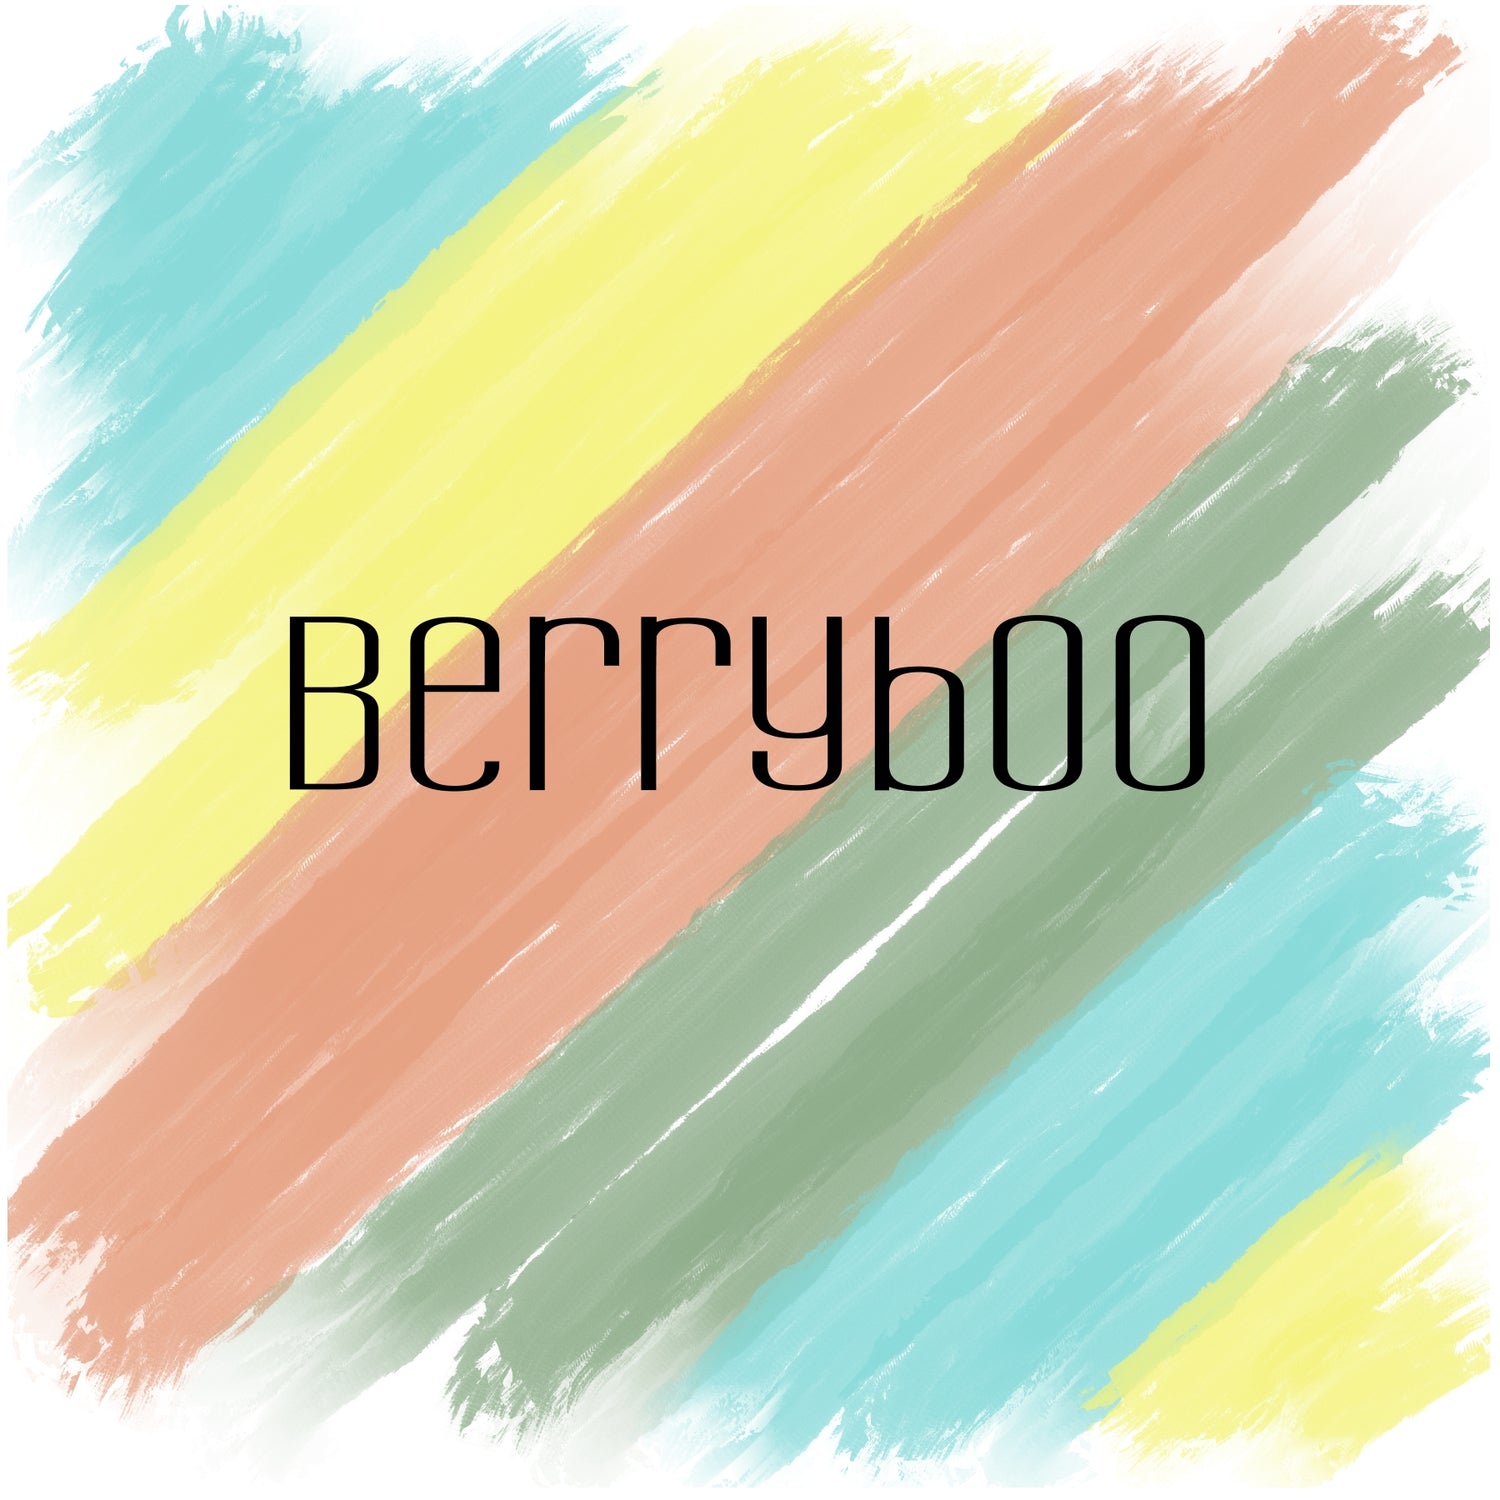 Berryboo